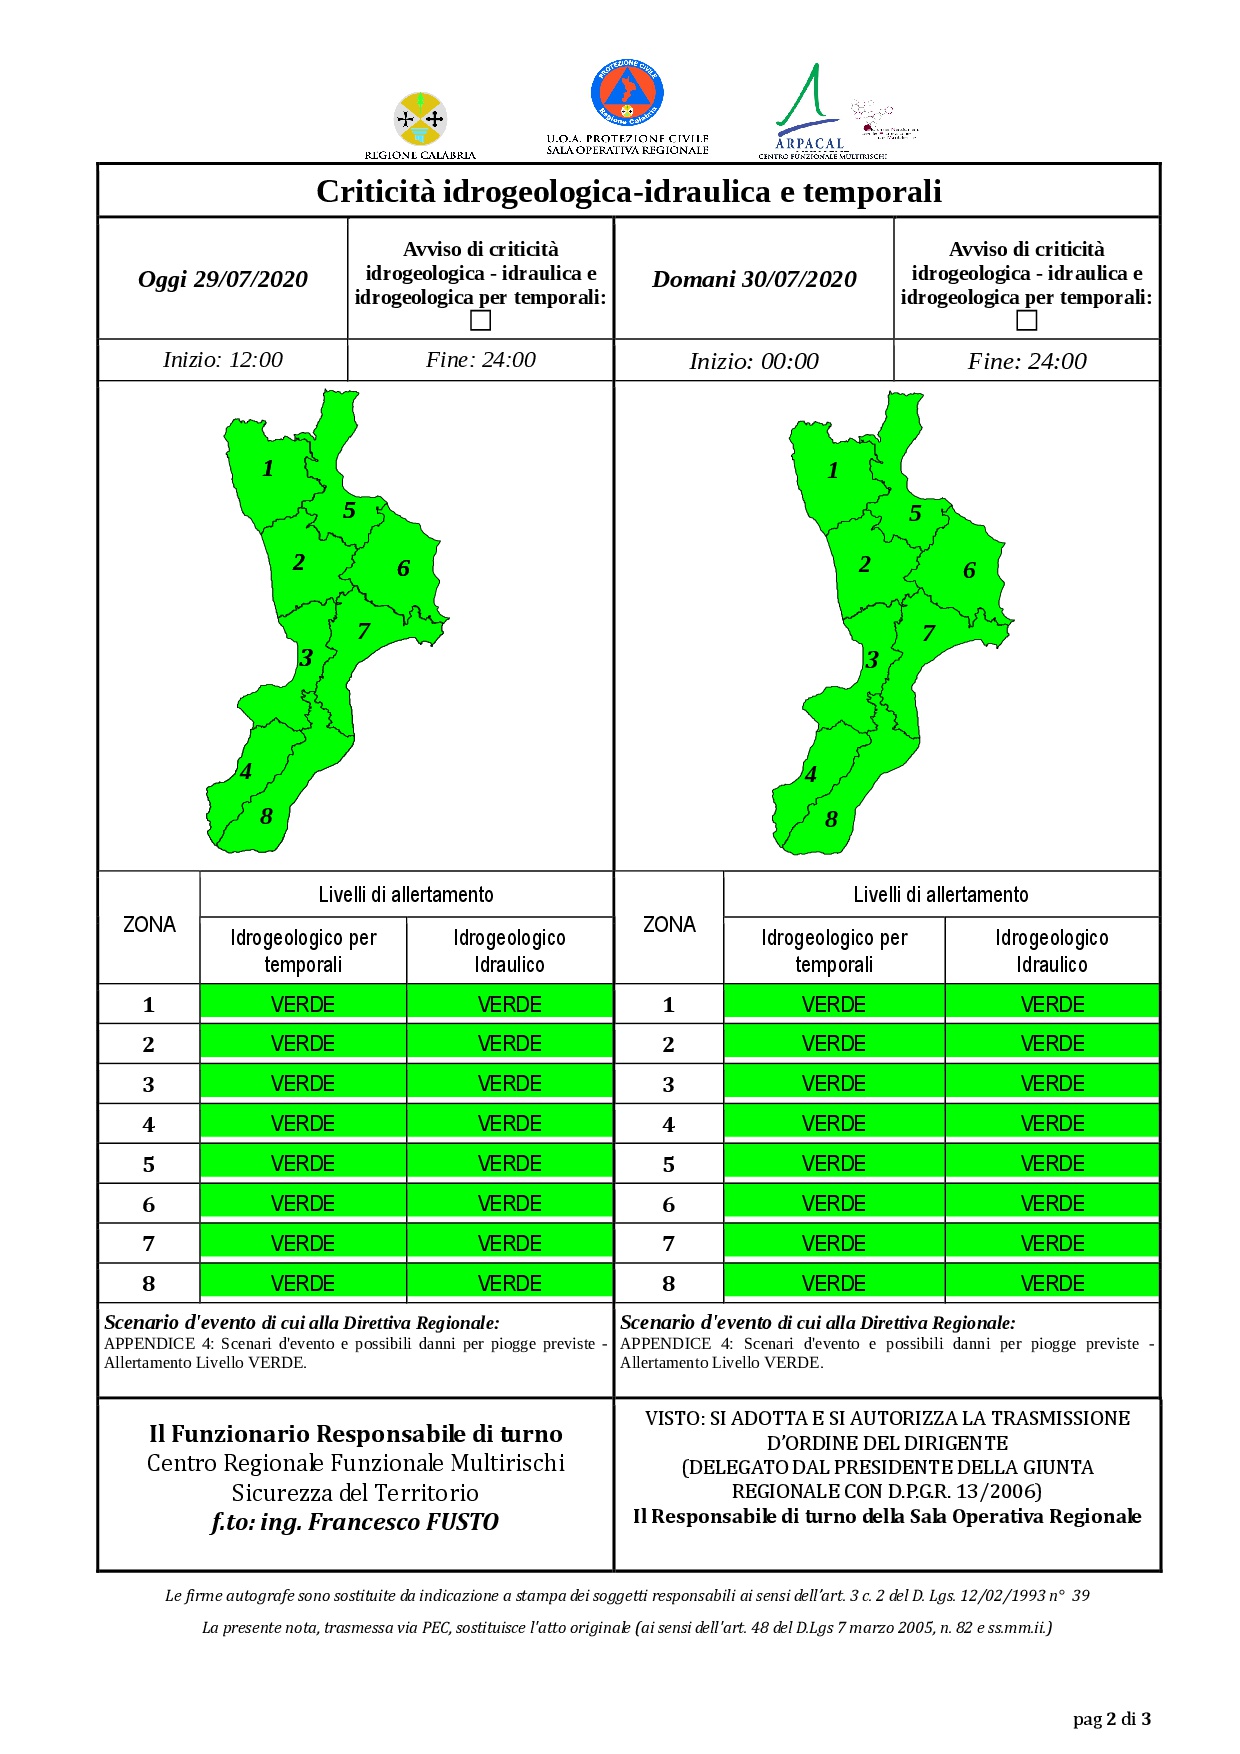 Criticità idrogeologica-idraulica e temporali in Calabria 29-07-2020